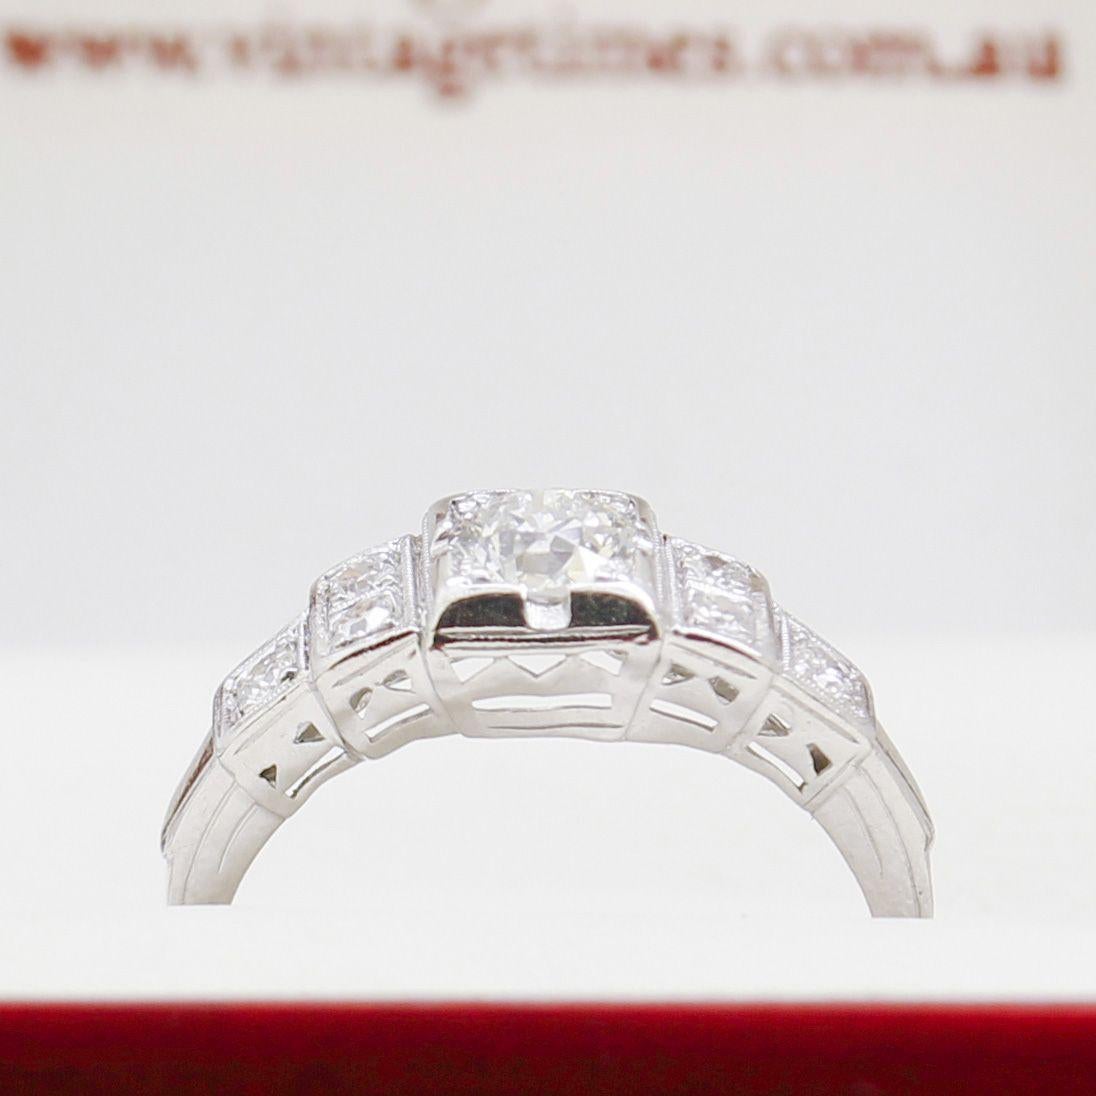 Art Deco Old European Cut Diamond Engagement Ring, Stunning Stepped Design 7